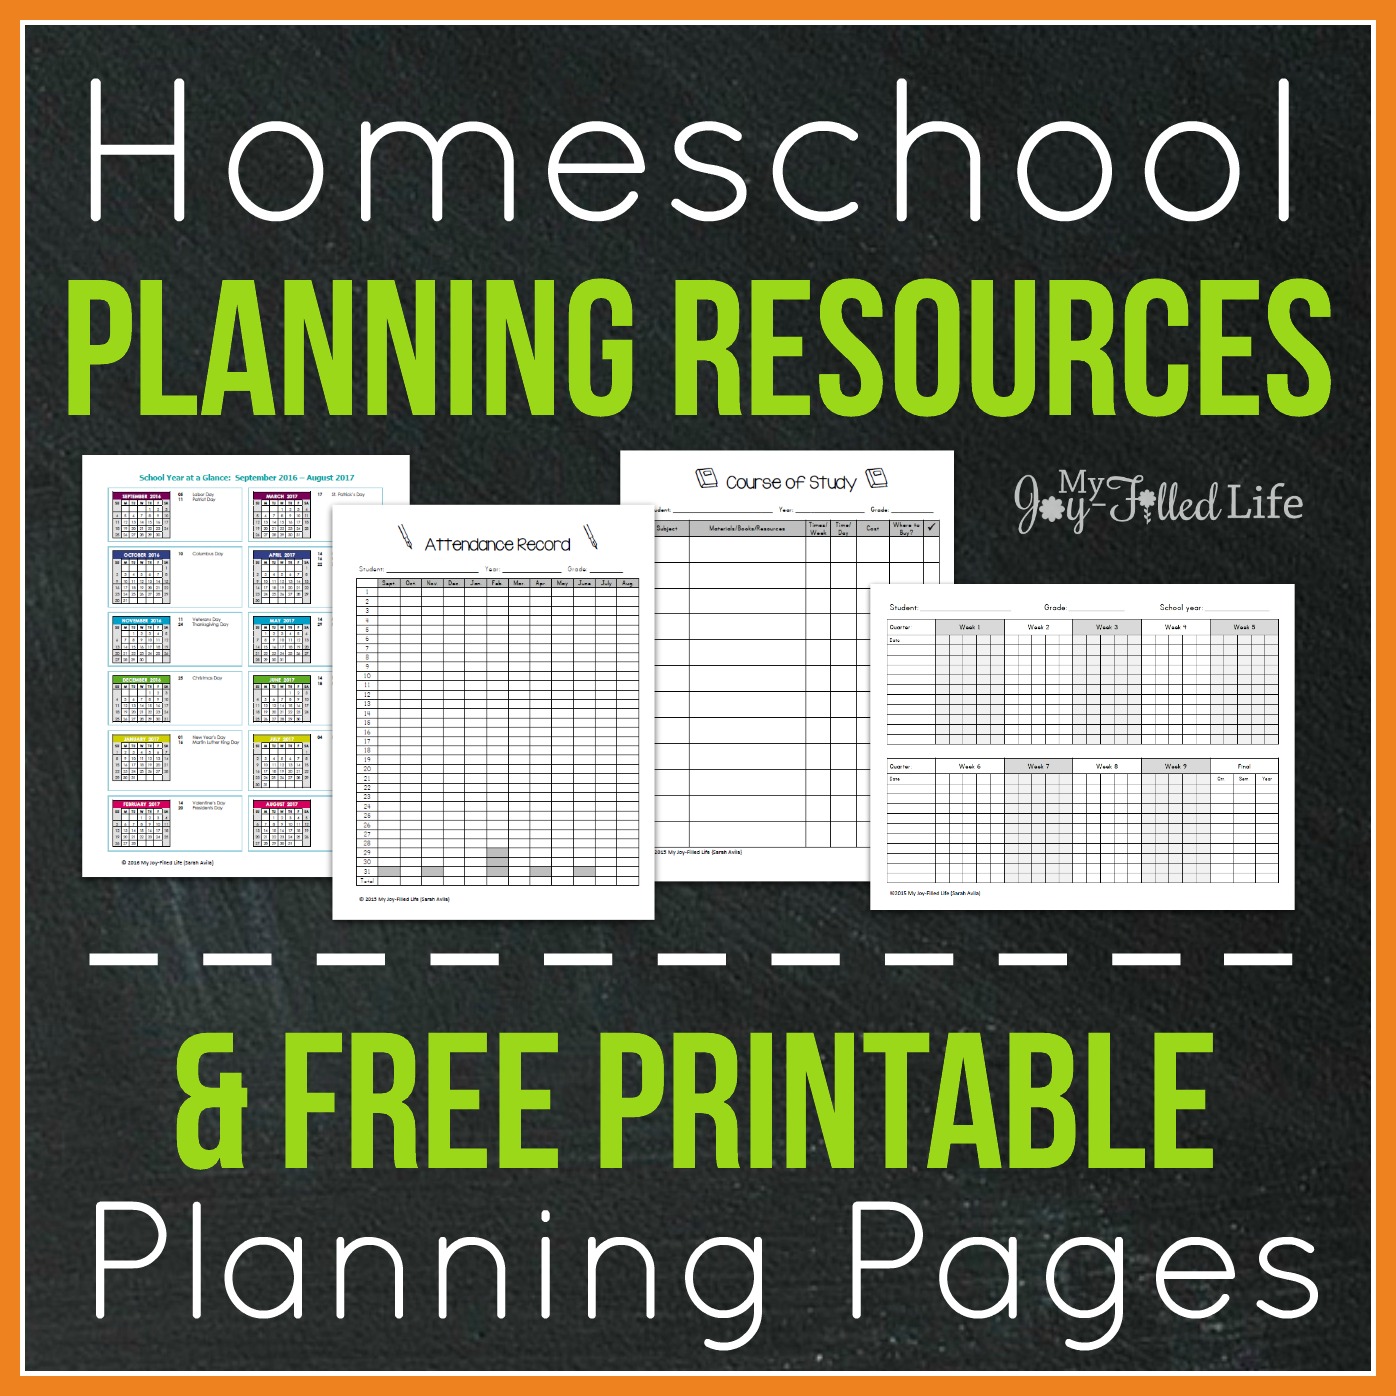 Top Homeschool Planning Resources & FREE Printable Planning